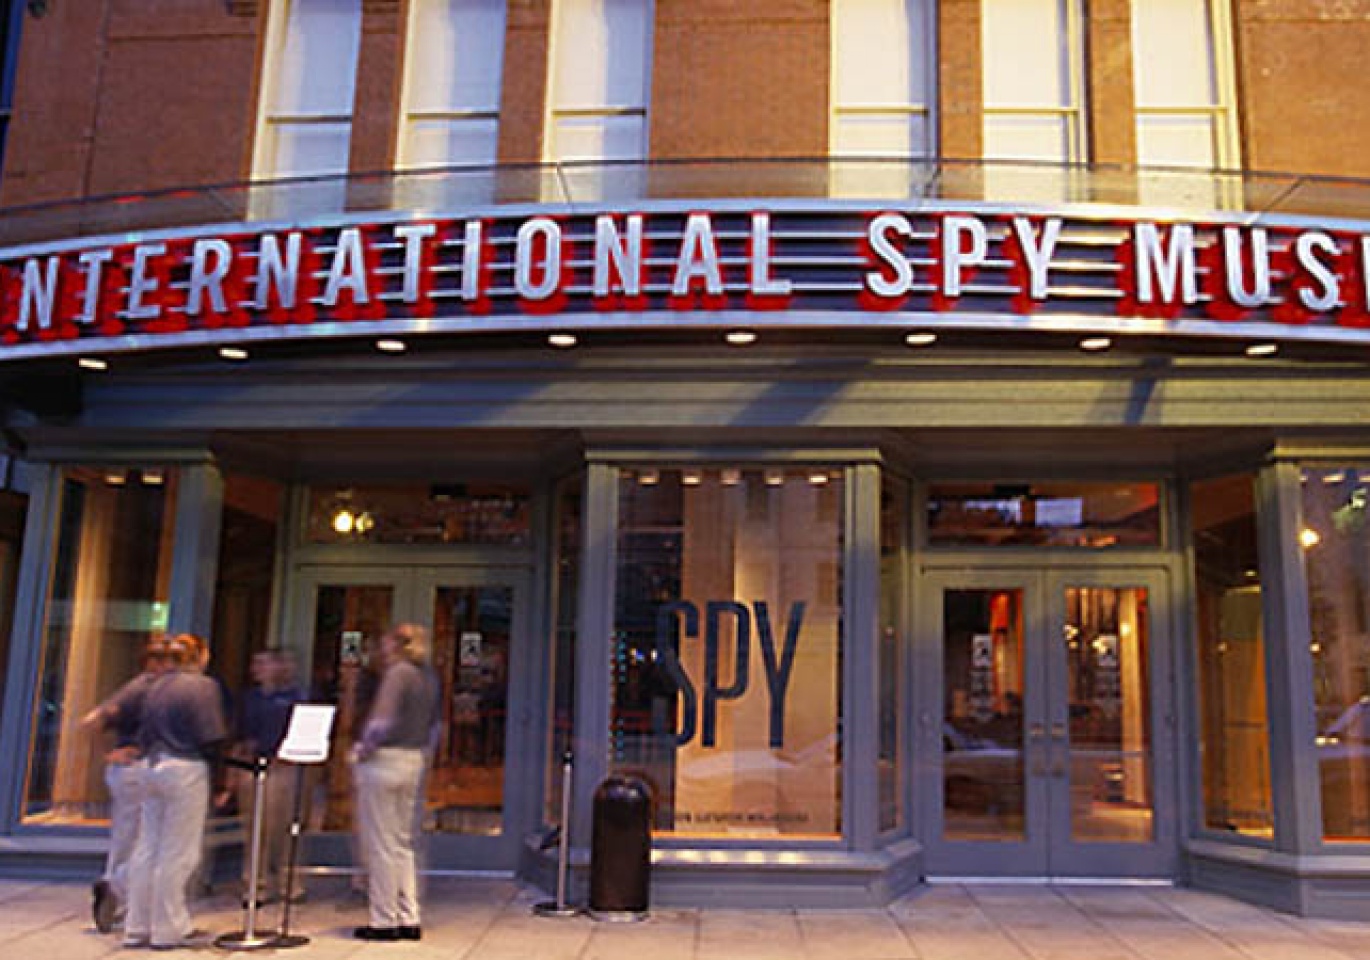 International Spy Museum Image 3